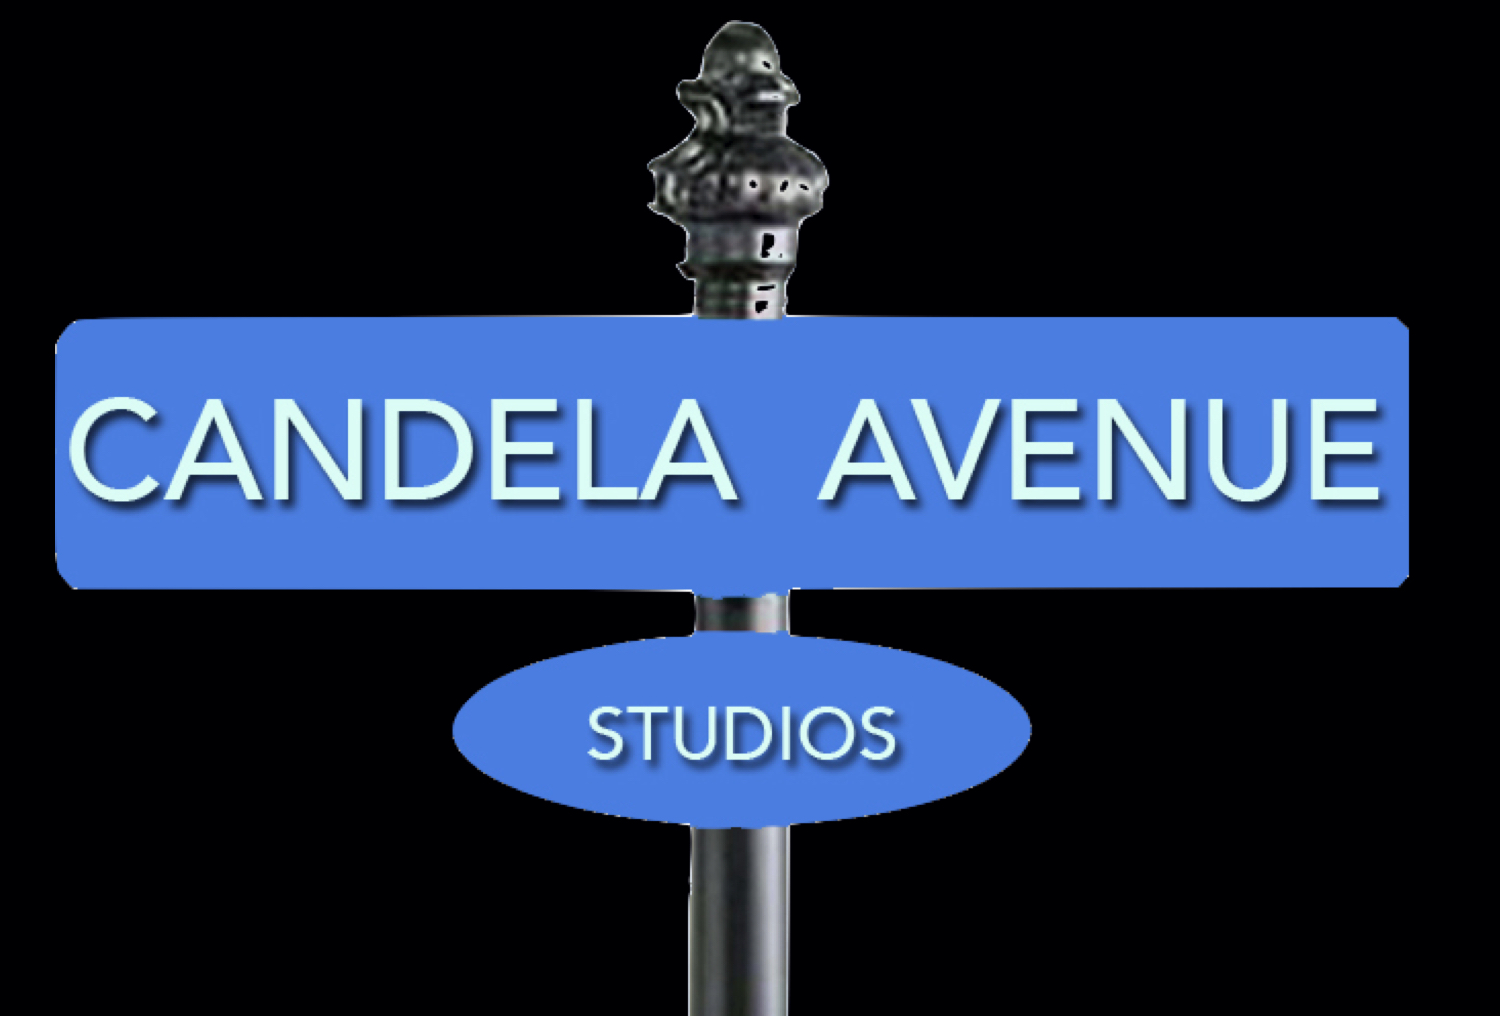 Candela Avenue Studios